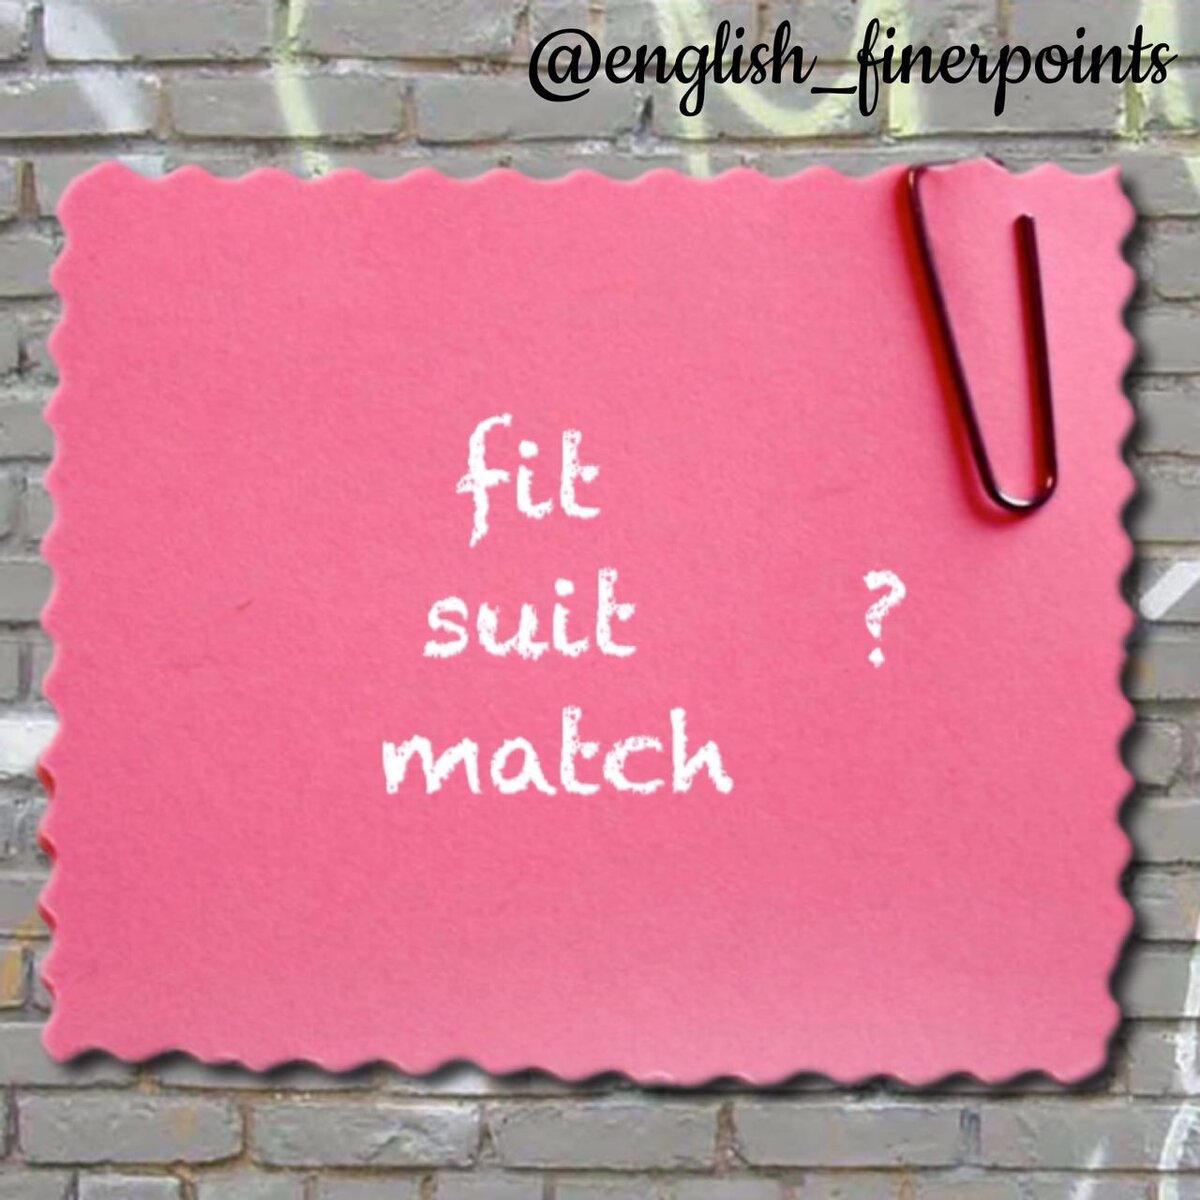 Suitable match. Fit Match Suit. Match Suit Fit разница. Fit Match Suit go with разница. Match Suit Fit упражнения.